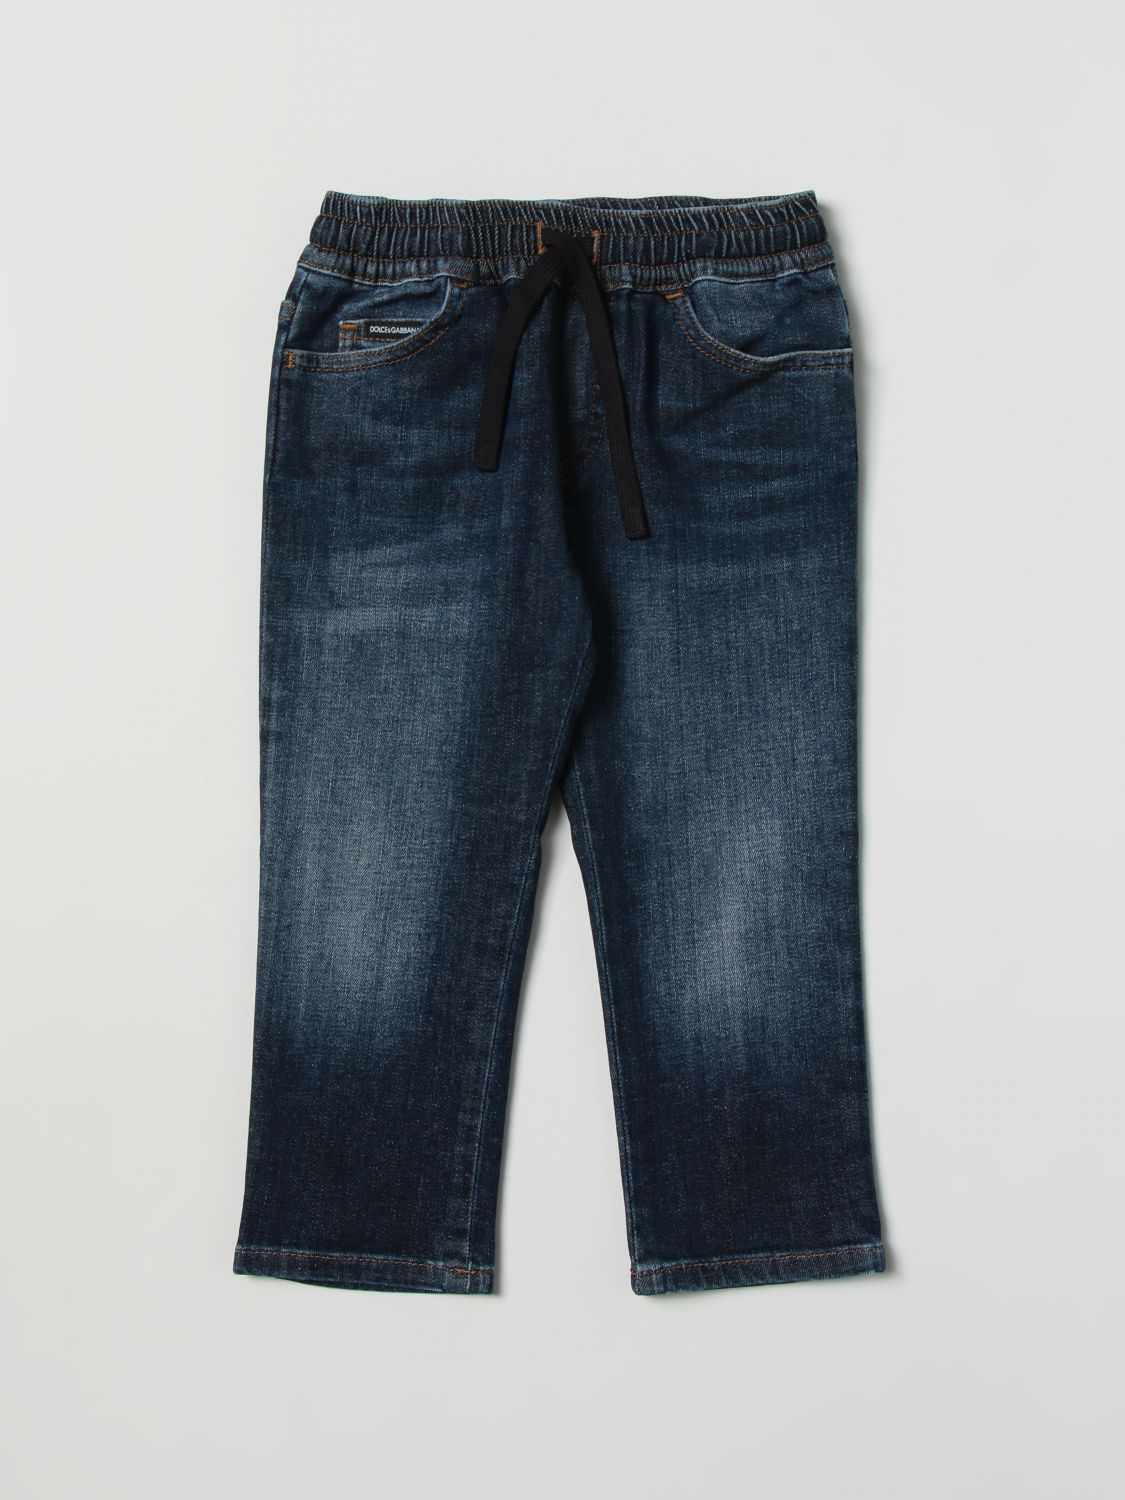 Dolce & Gabbana Kids' Jeans In Washed Denim